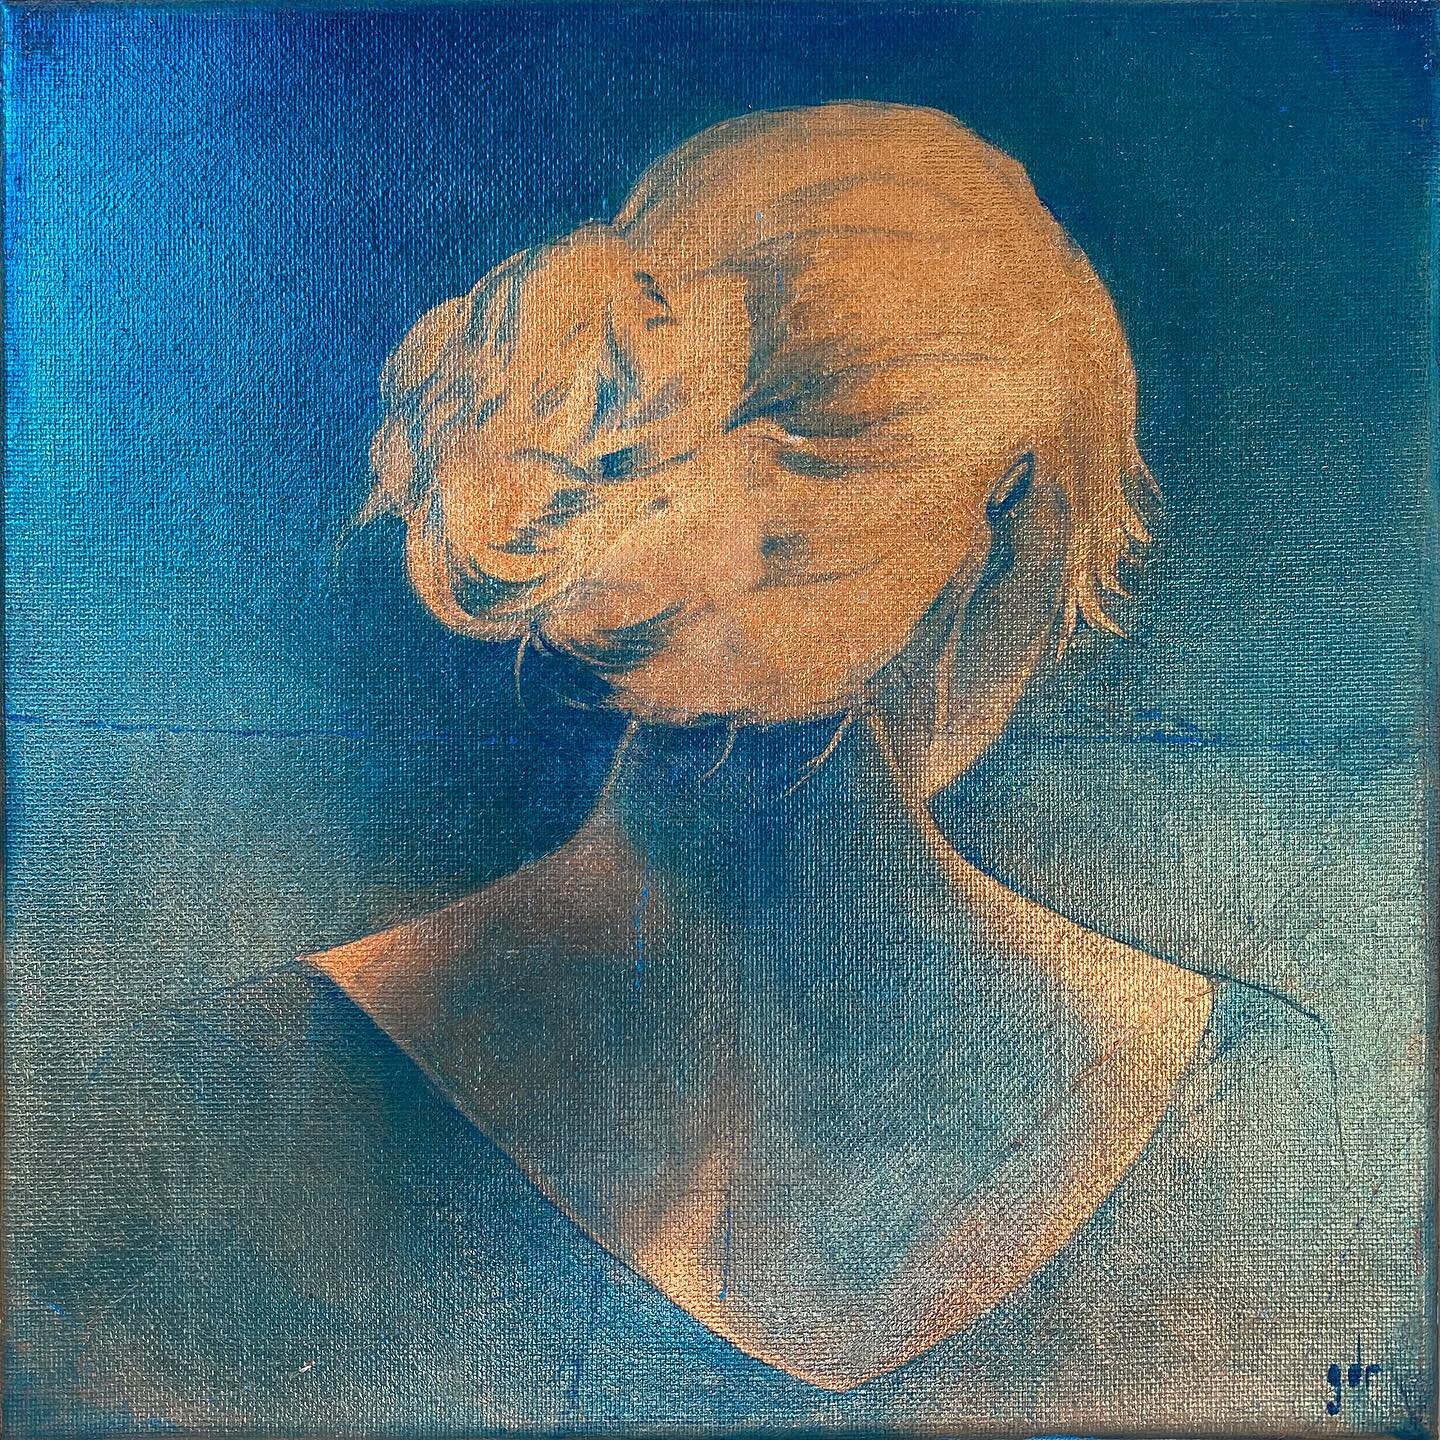 &ldquo;Her Grace&rdquo;
Oil and copper leaf on canvas 
10&rdquo;x10&rdquo; 
Available on @artfinder_com 
#oilpainting #painting #copper #blue #copperleaf #back #portrait #reverse #hair #beauty #woman #art #arte #gingerdelrey #grace #neck #bun @moriah